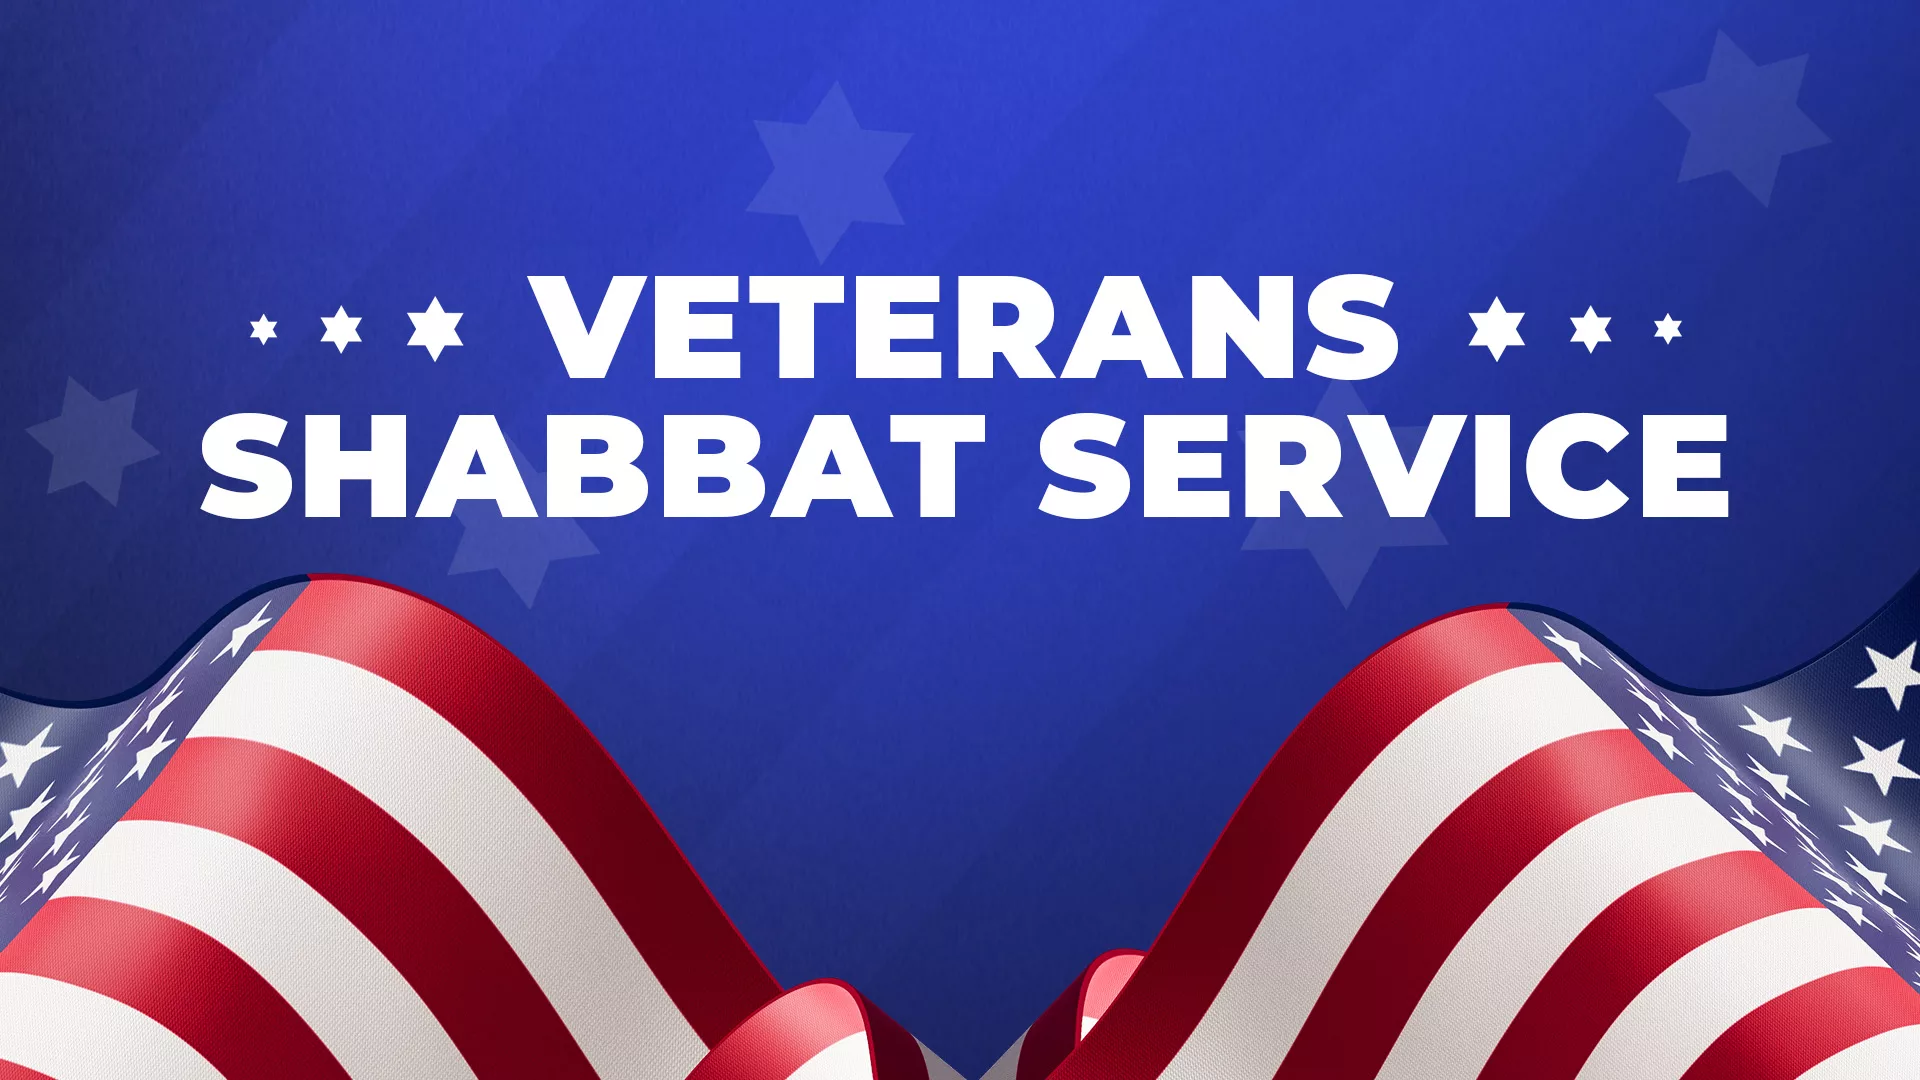 Veterans Shabbat Service Banner American Flags